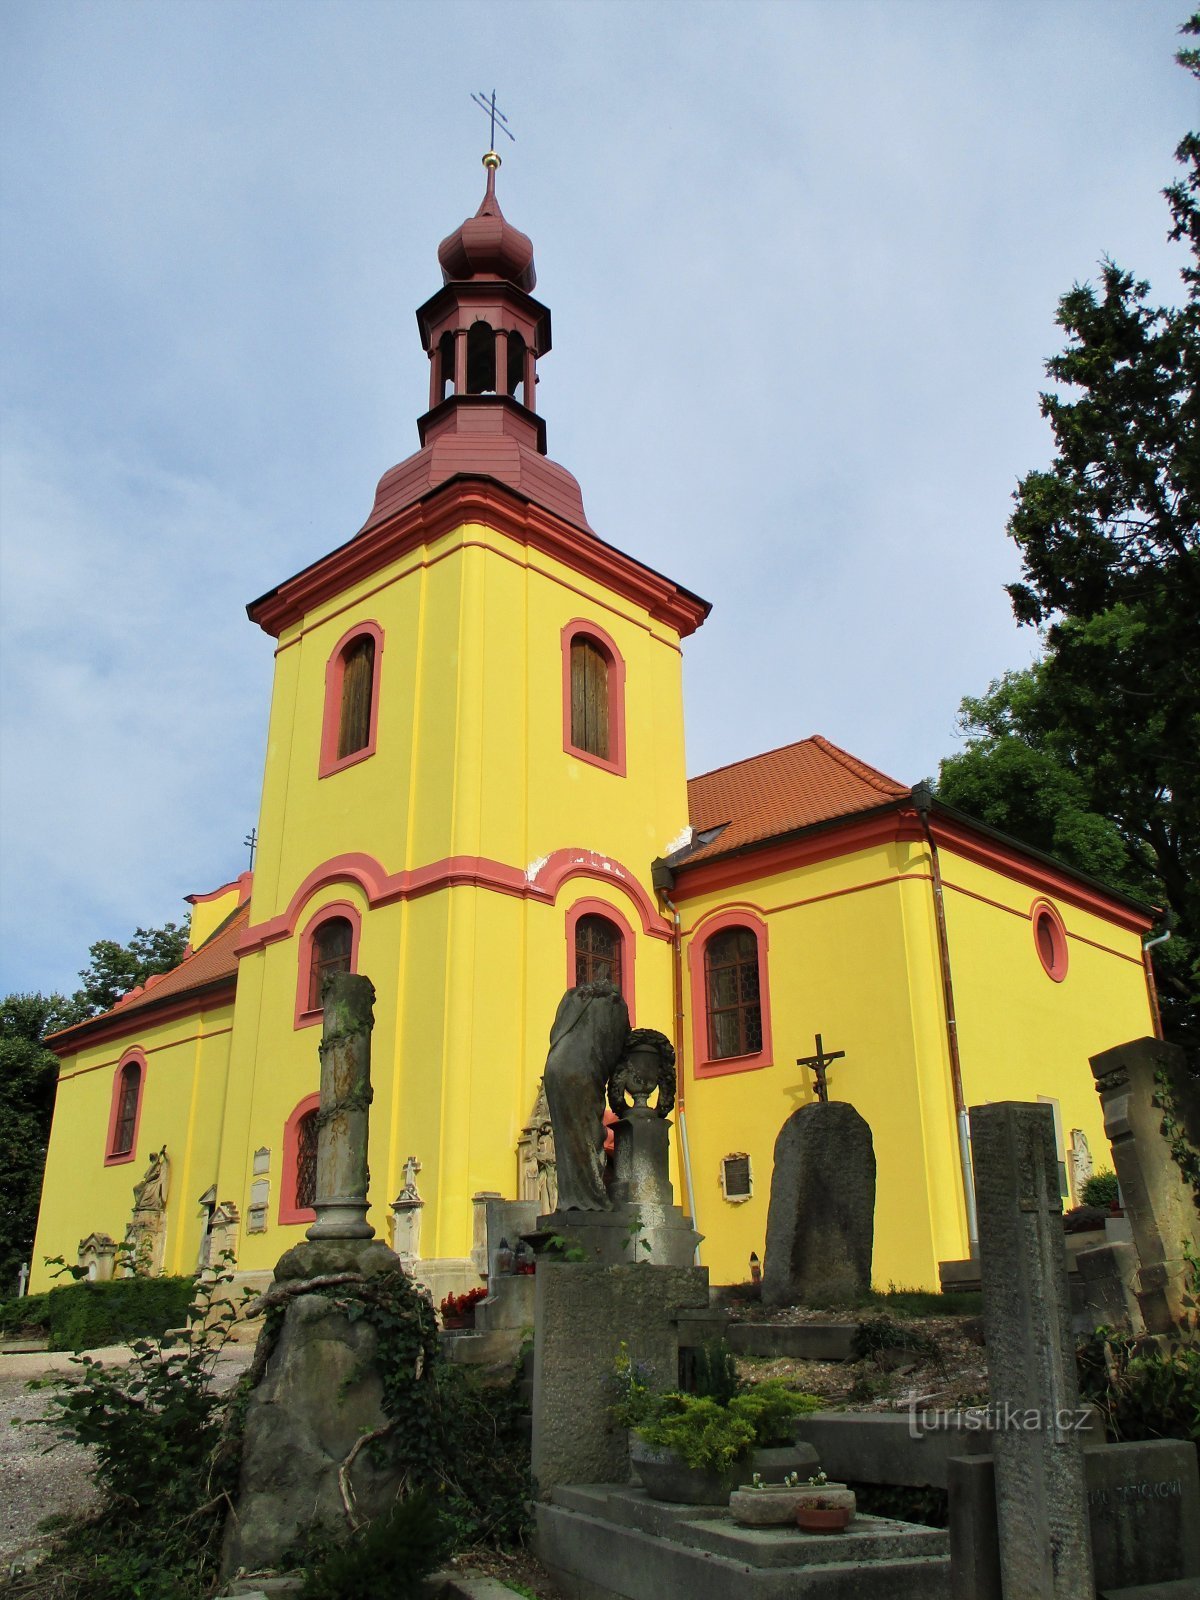 Iglesia del cementerio de St. Gothard, obispo (Hořice, 26.7.2020/XNUMX/XNUMX)